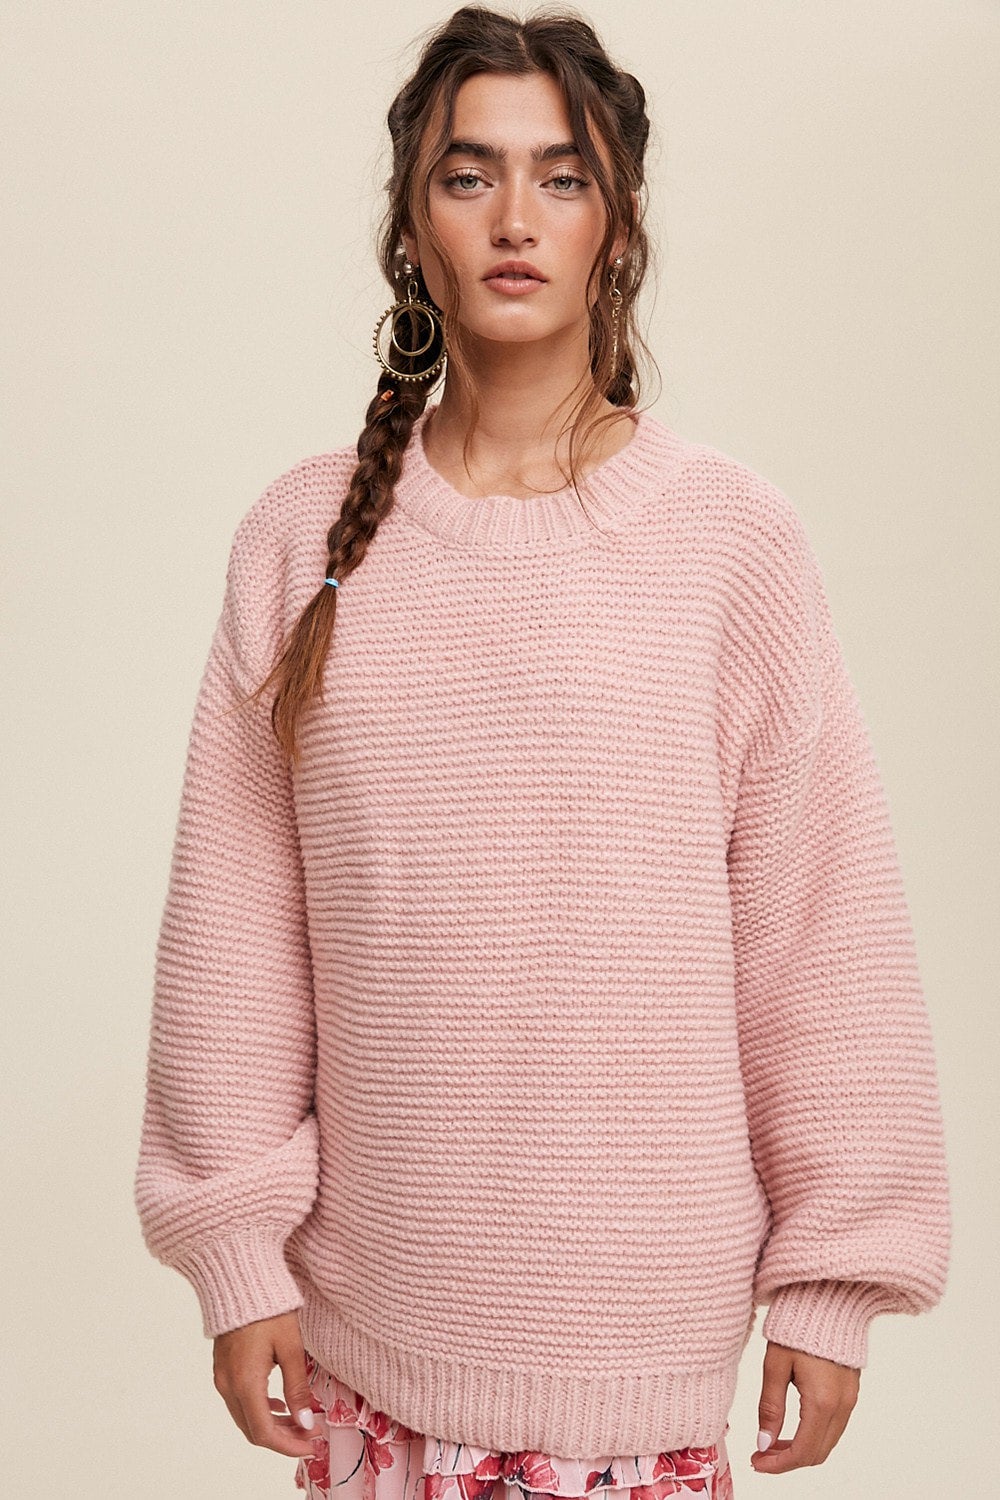 Pink Washed Denim Jacket – Dawson & Daisy Boutique